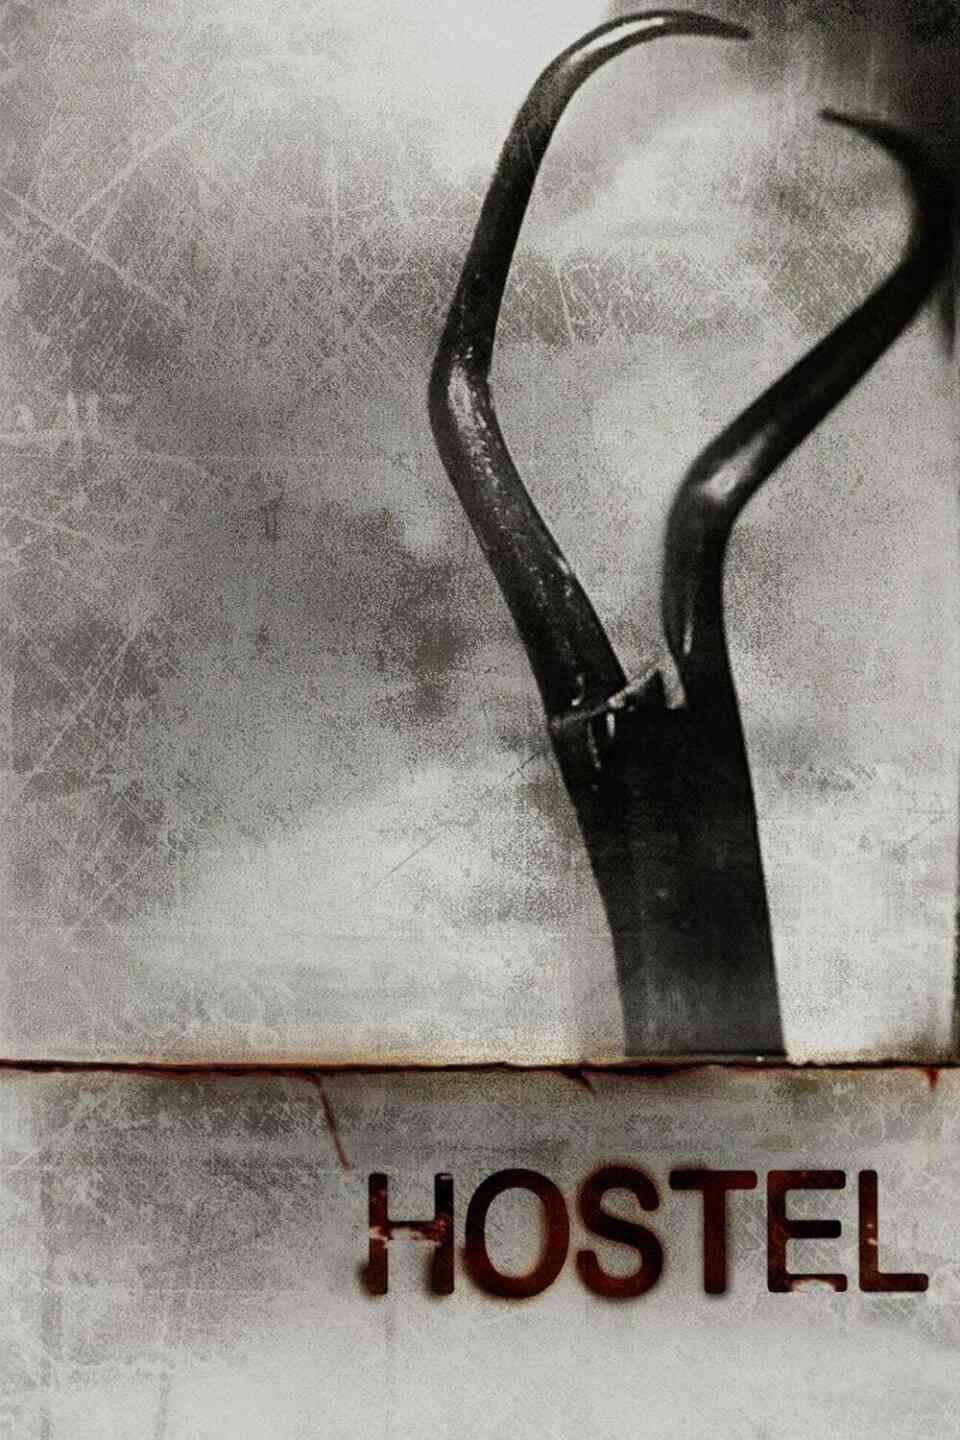 Read Hostel screenplay (poster)